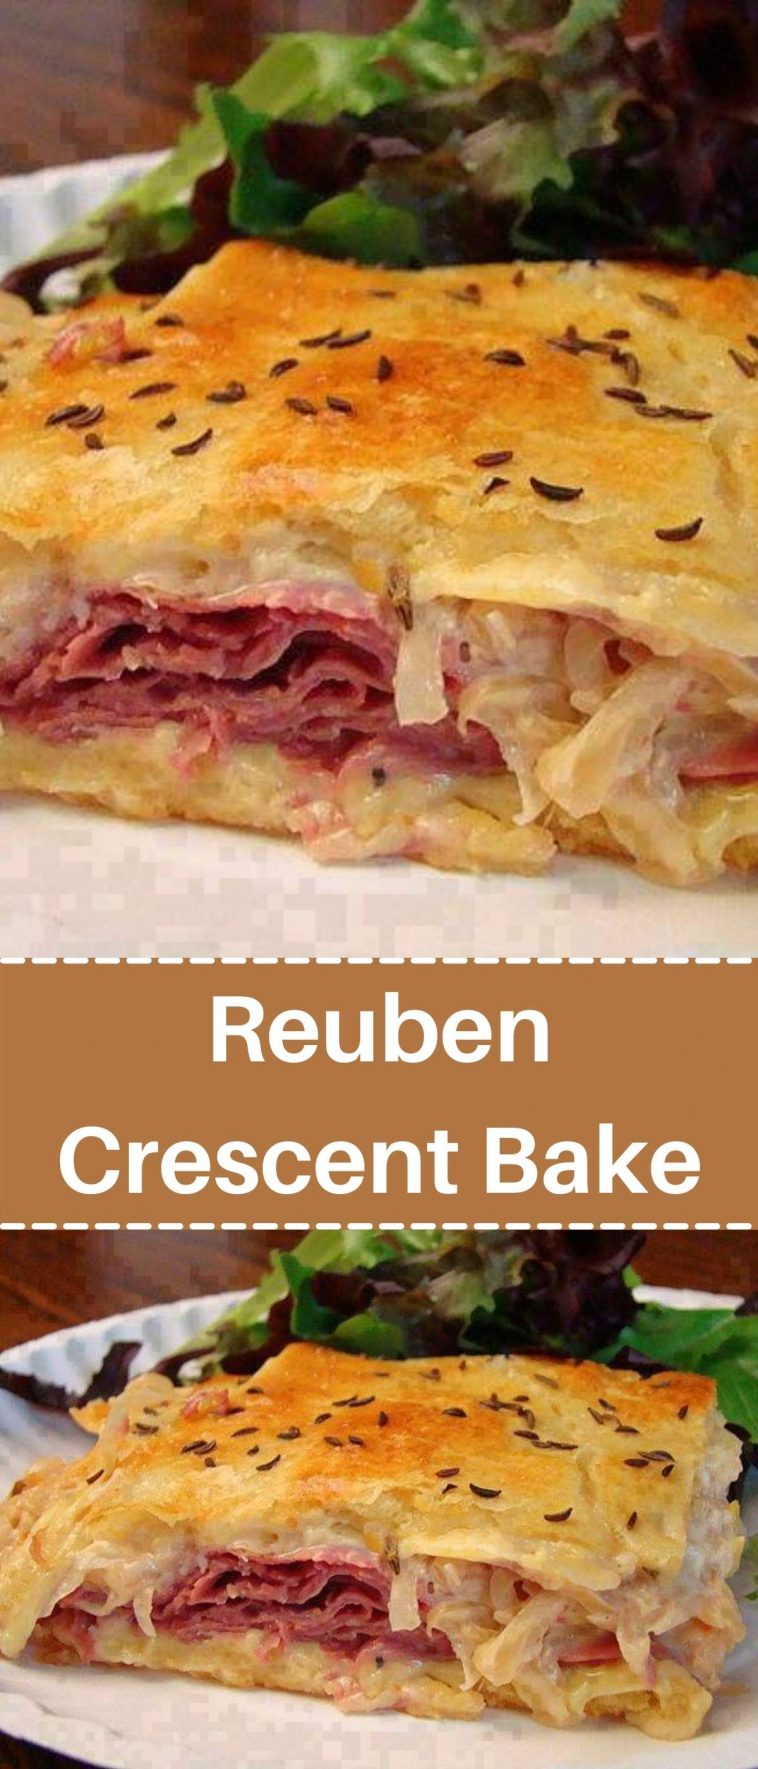 Reuben Crescent Bake